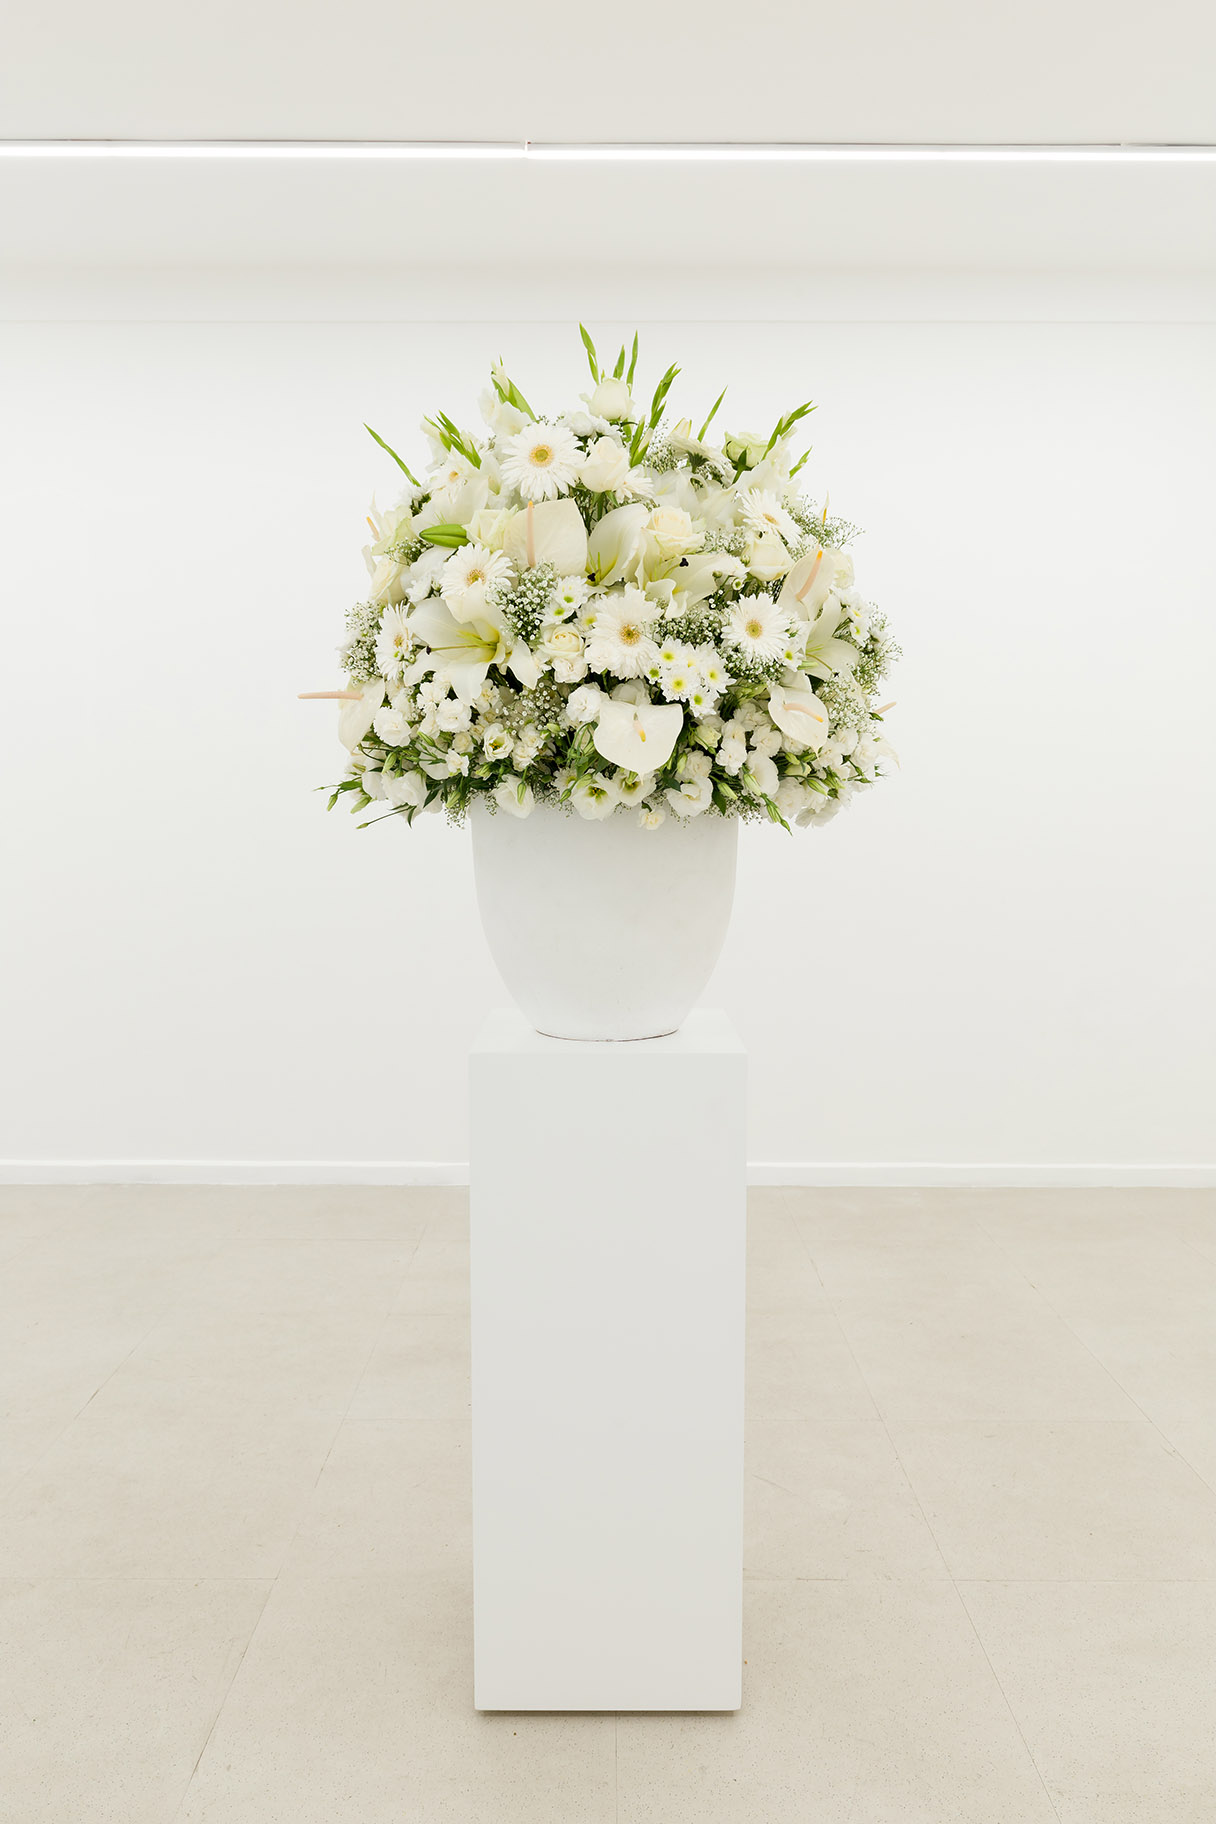 Willem de Rooij, Bouquet IX, 2012, Image courtesy of the Delgosha Gallery & the artist